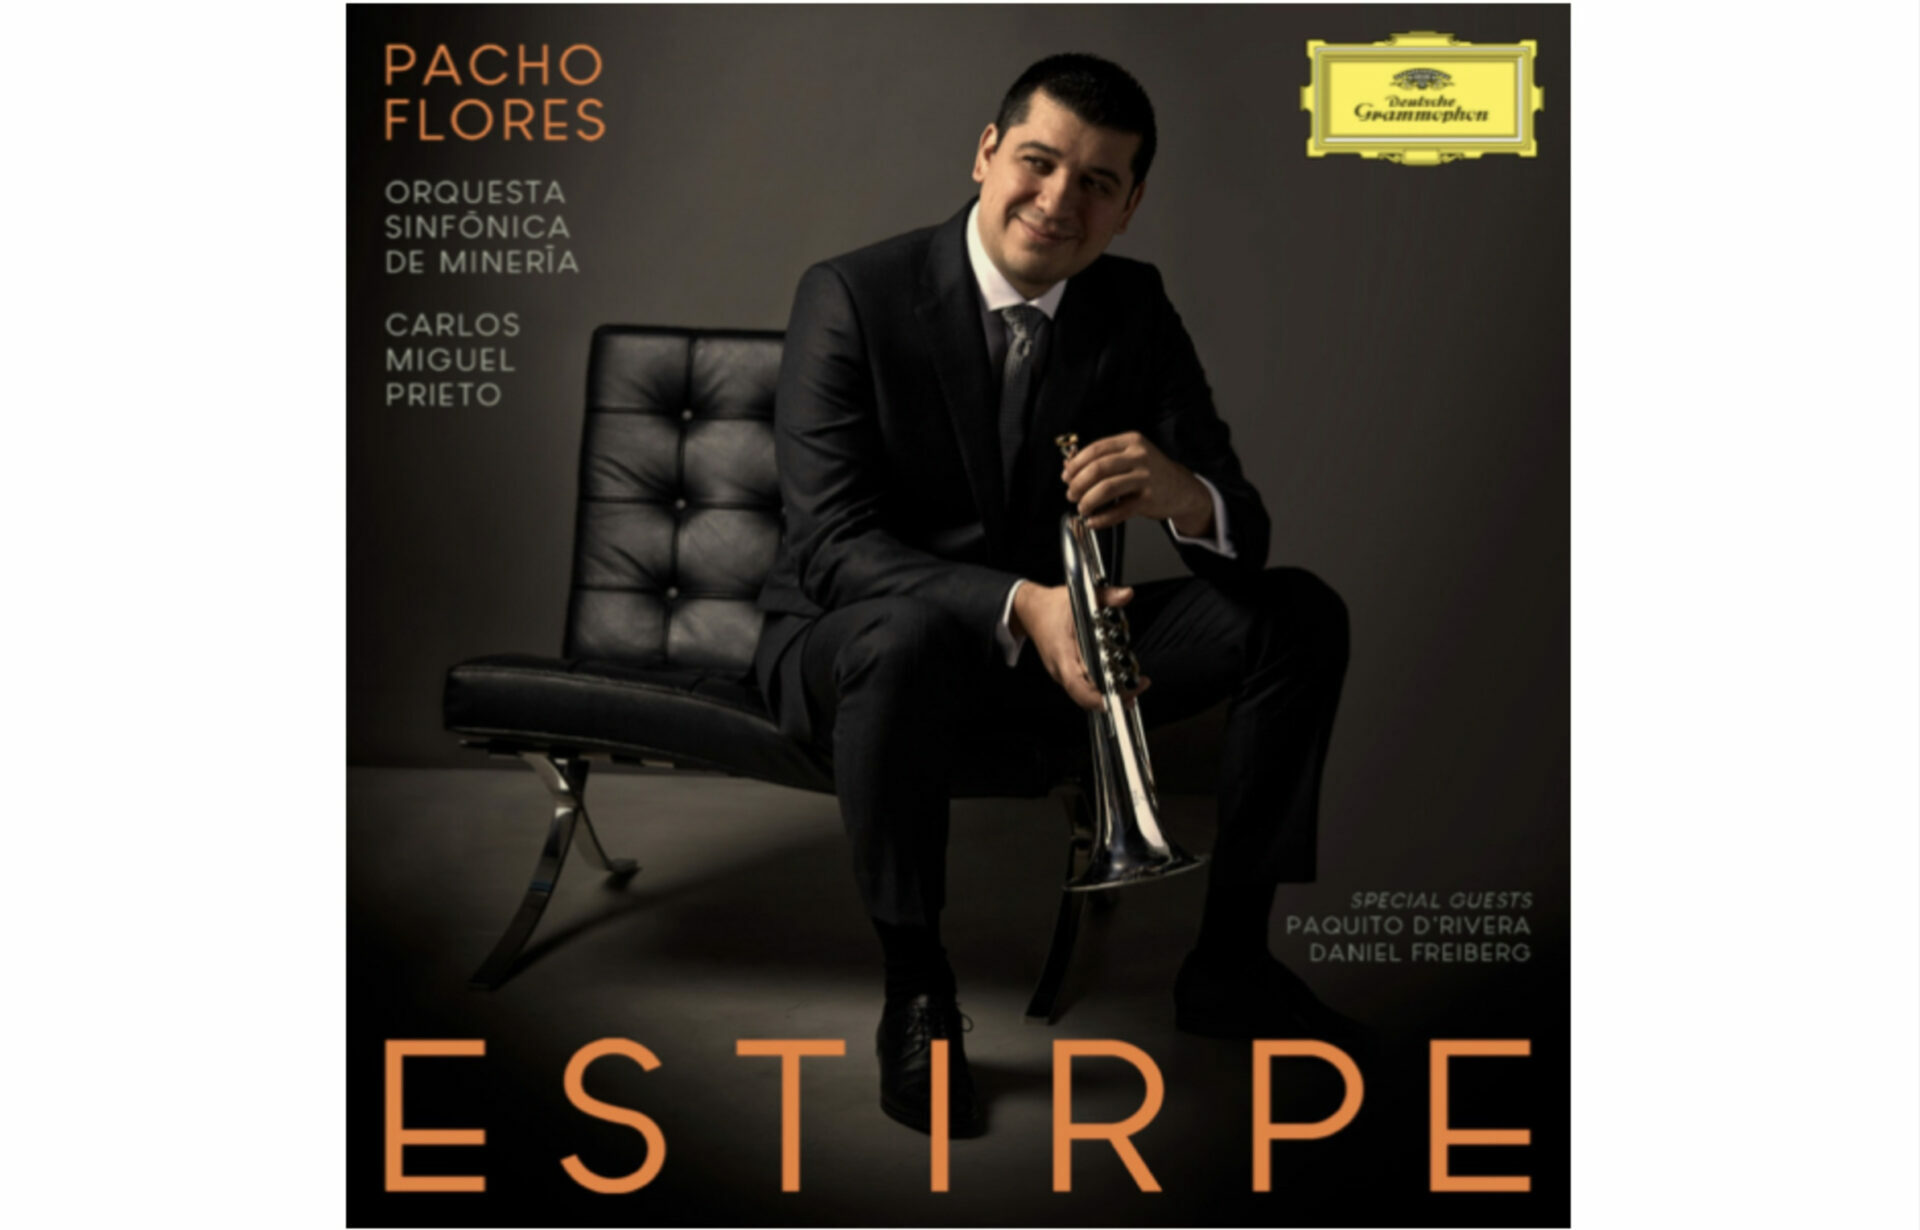 Pacho Flores releases ESTIRPE, new album for Deutsche Grammophon